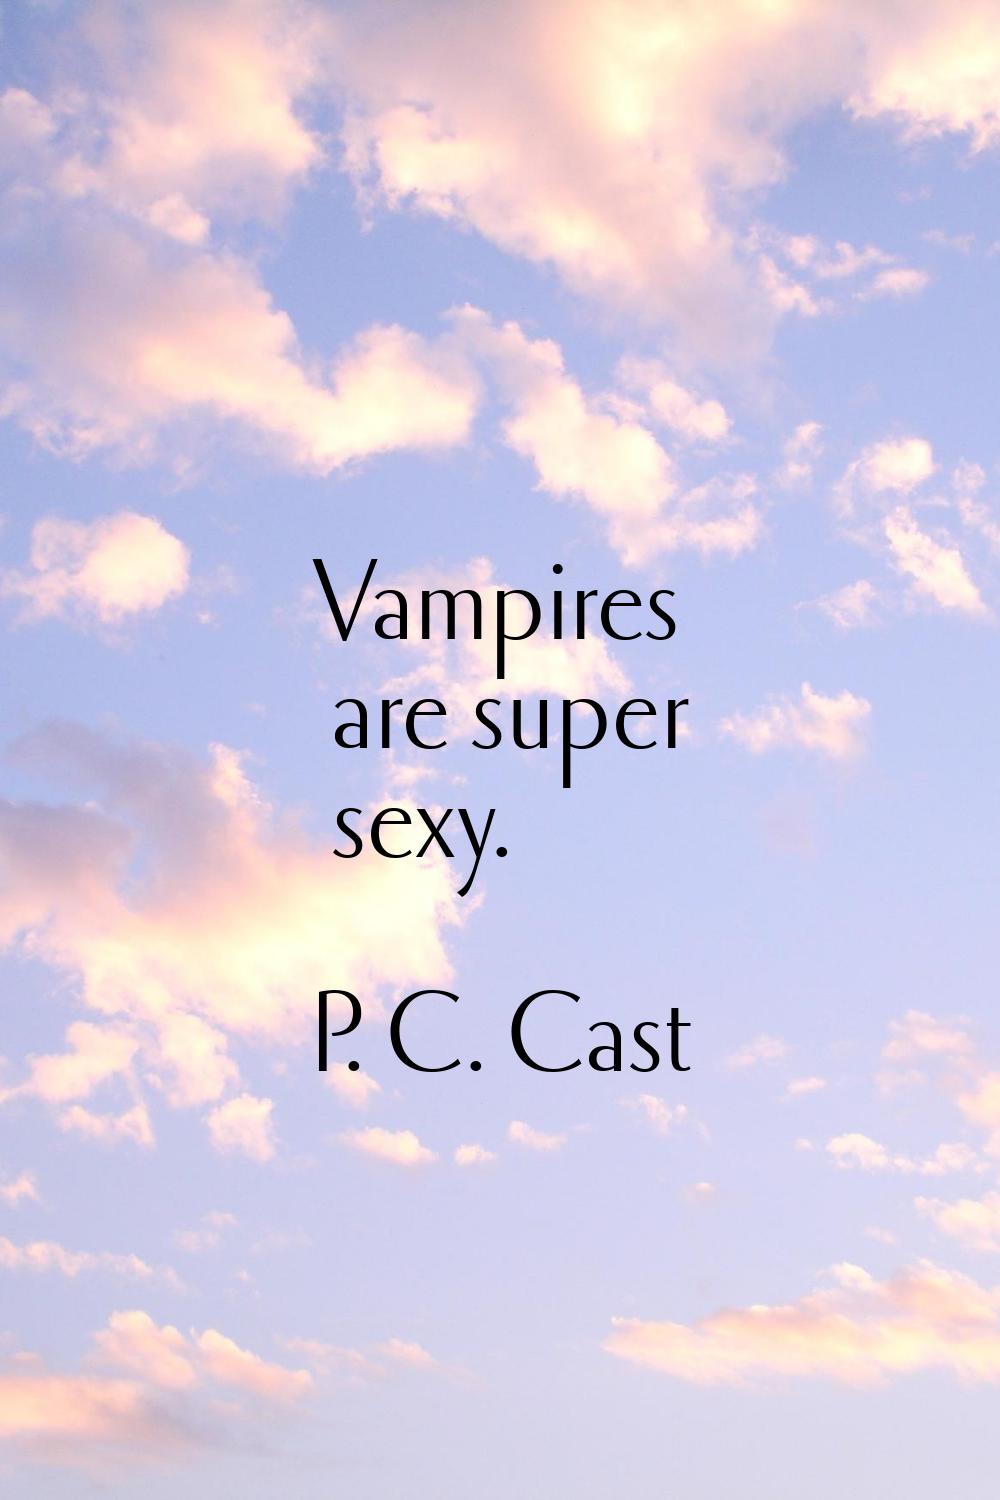 Vampires are super sexy.